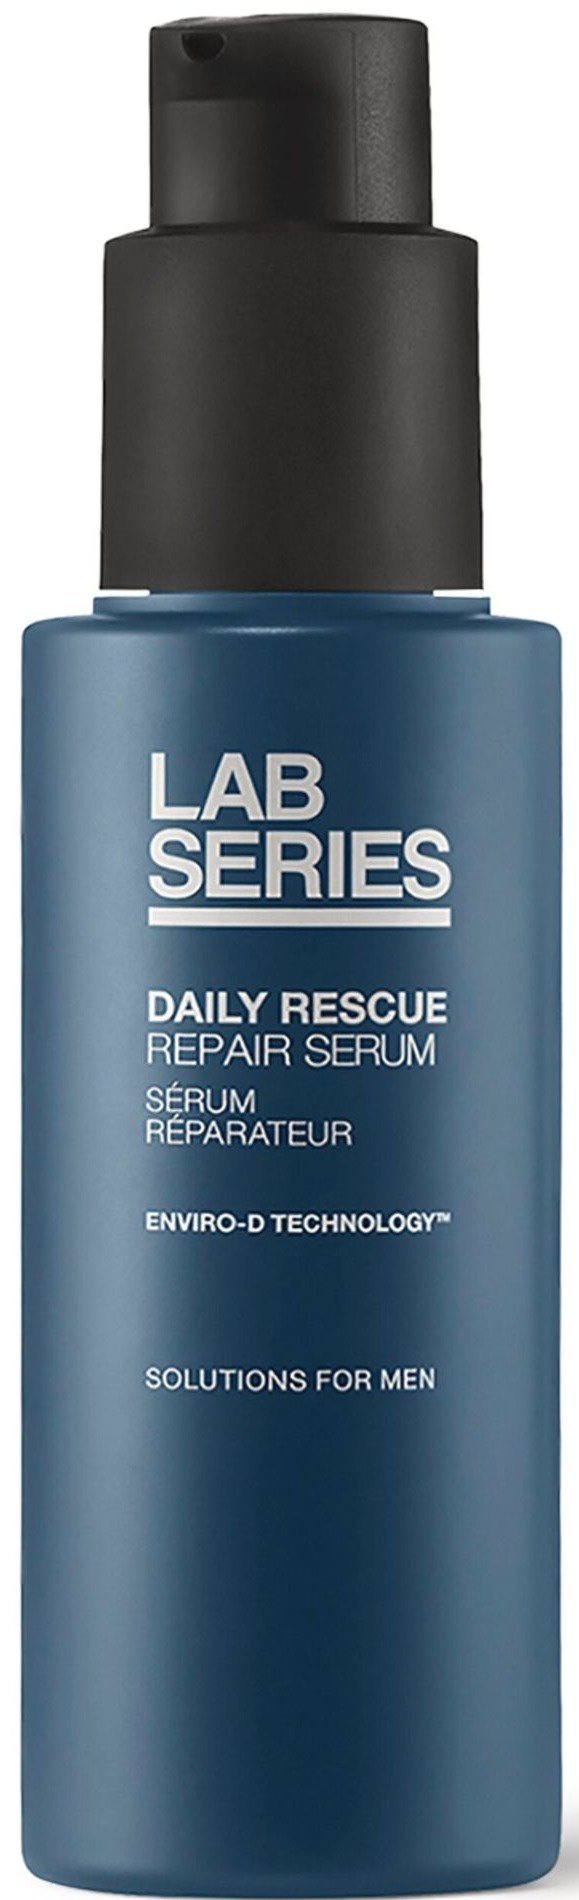 Lab Series Daily Rescue Repair Serum